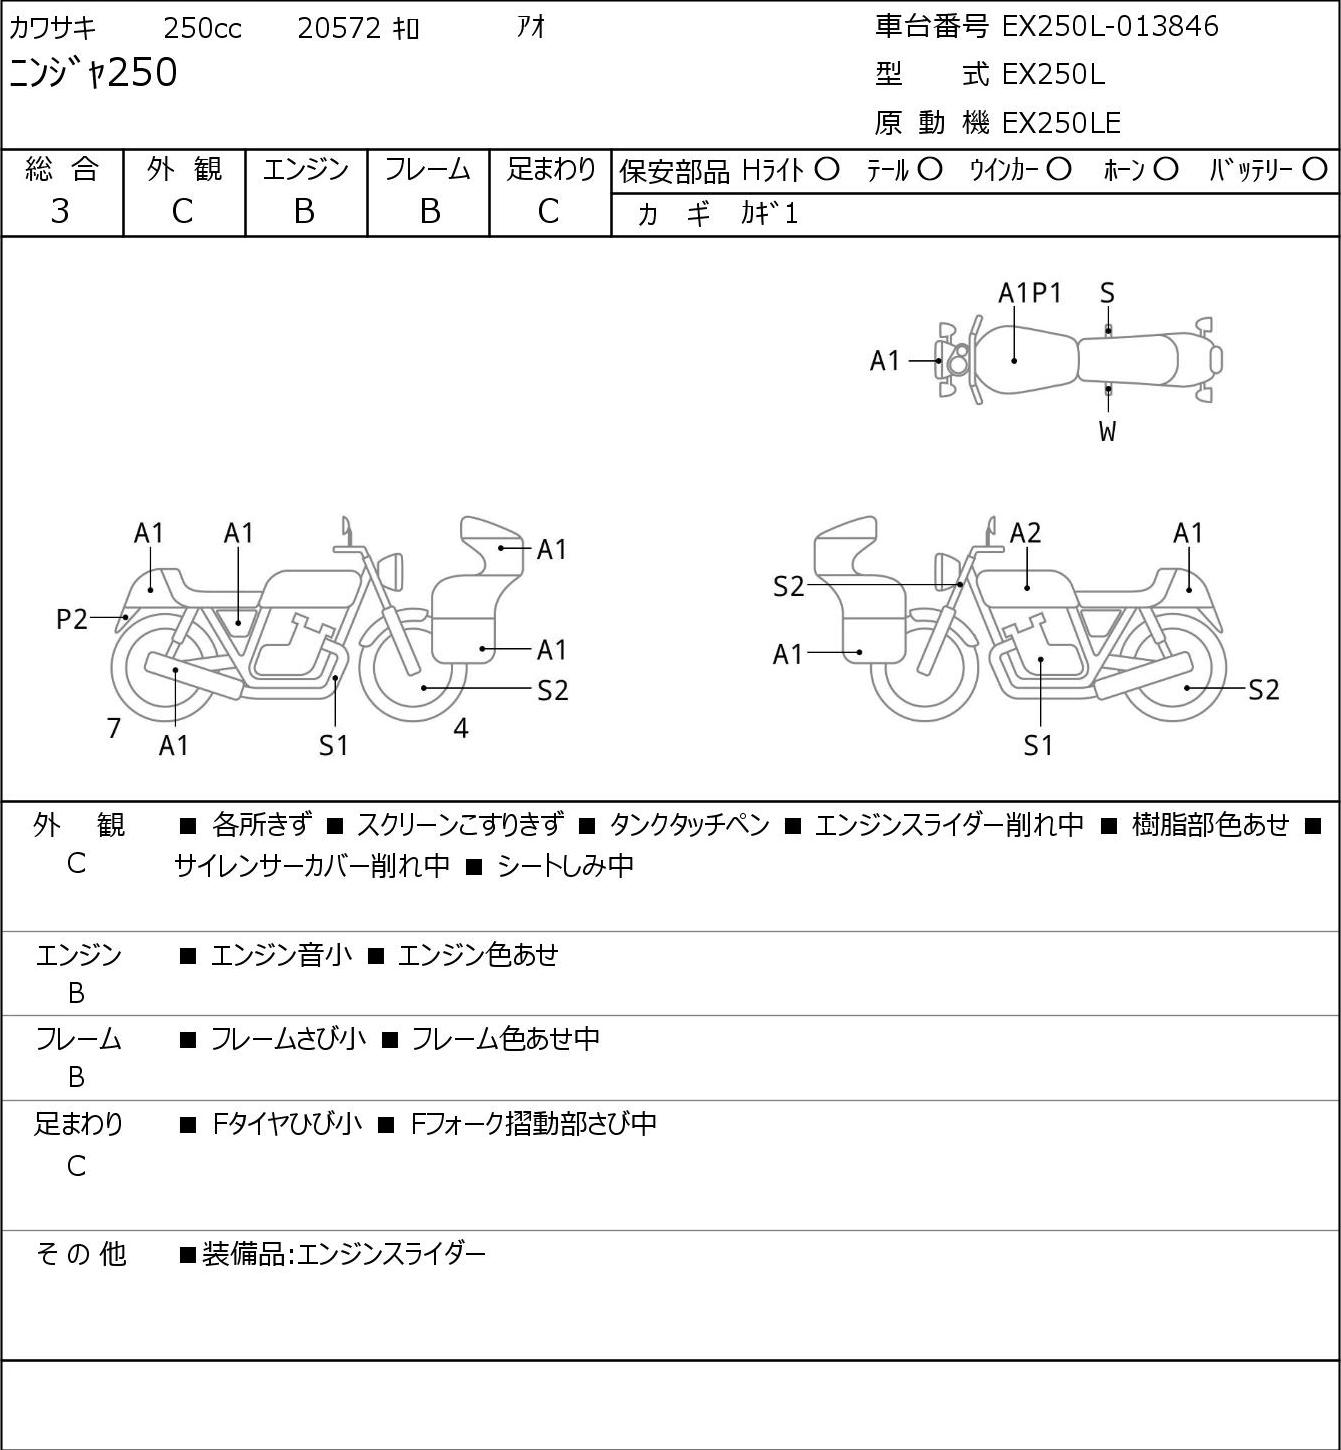 Kawasaki NINJA 250 EX250L - купить недорого